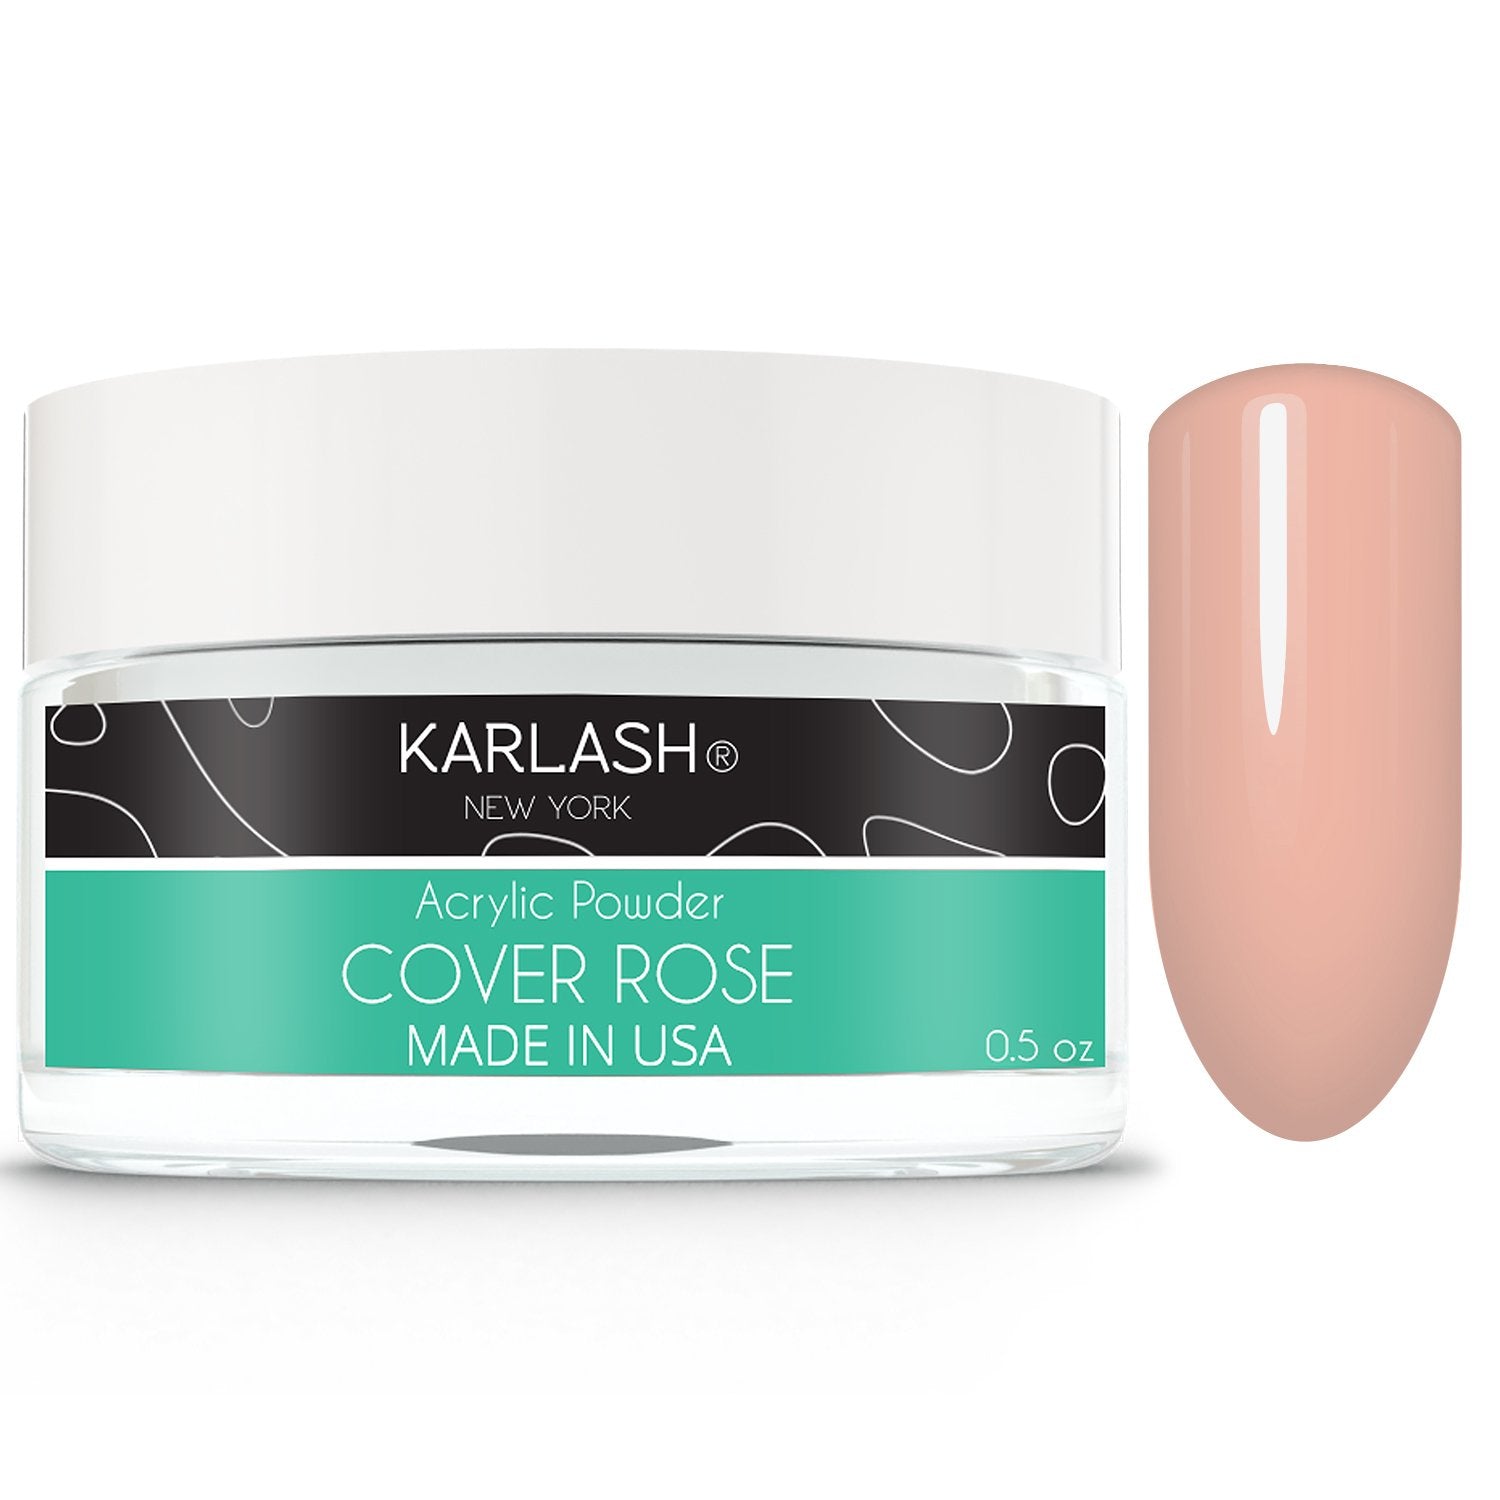 Karlash Professional Acrylic Powder Cover Rose 0.5 oz